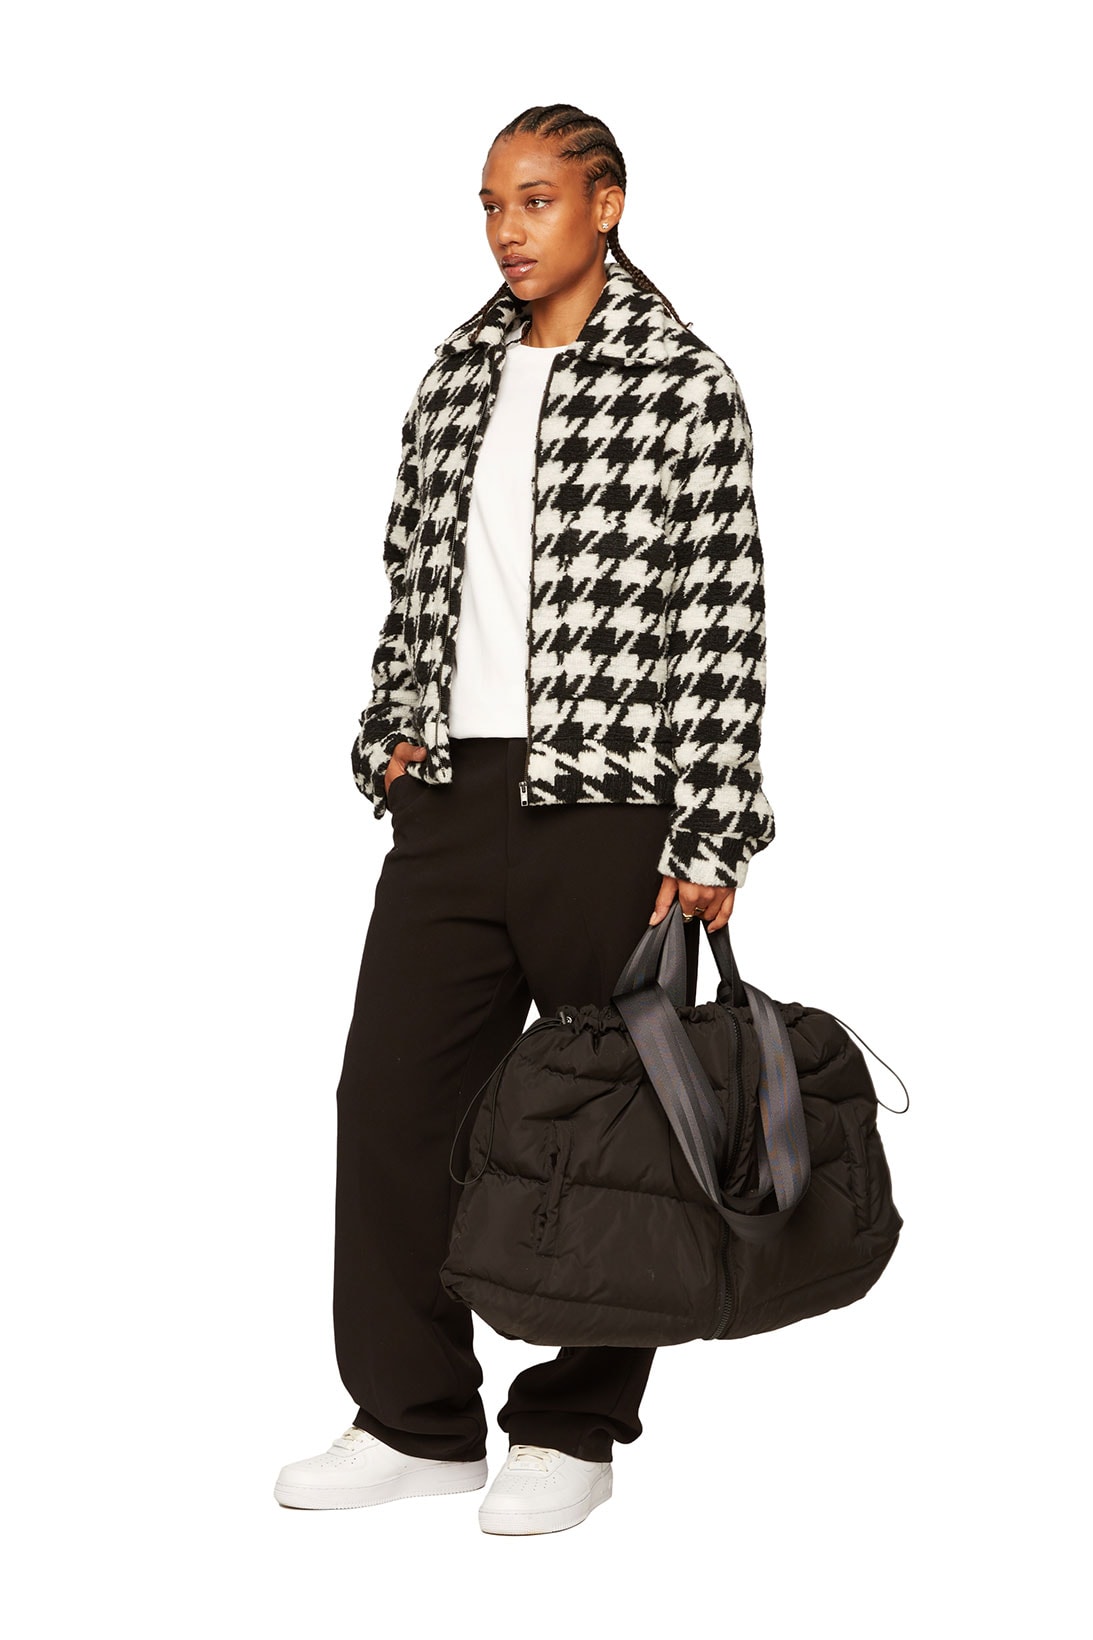 atelier new regime montreal brand fall winter lookbook houndstooth fleece jacket black trousers bag